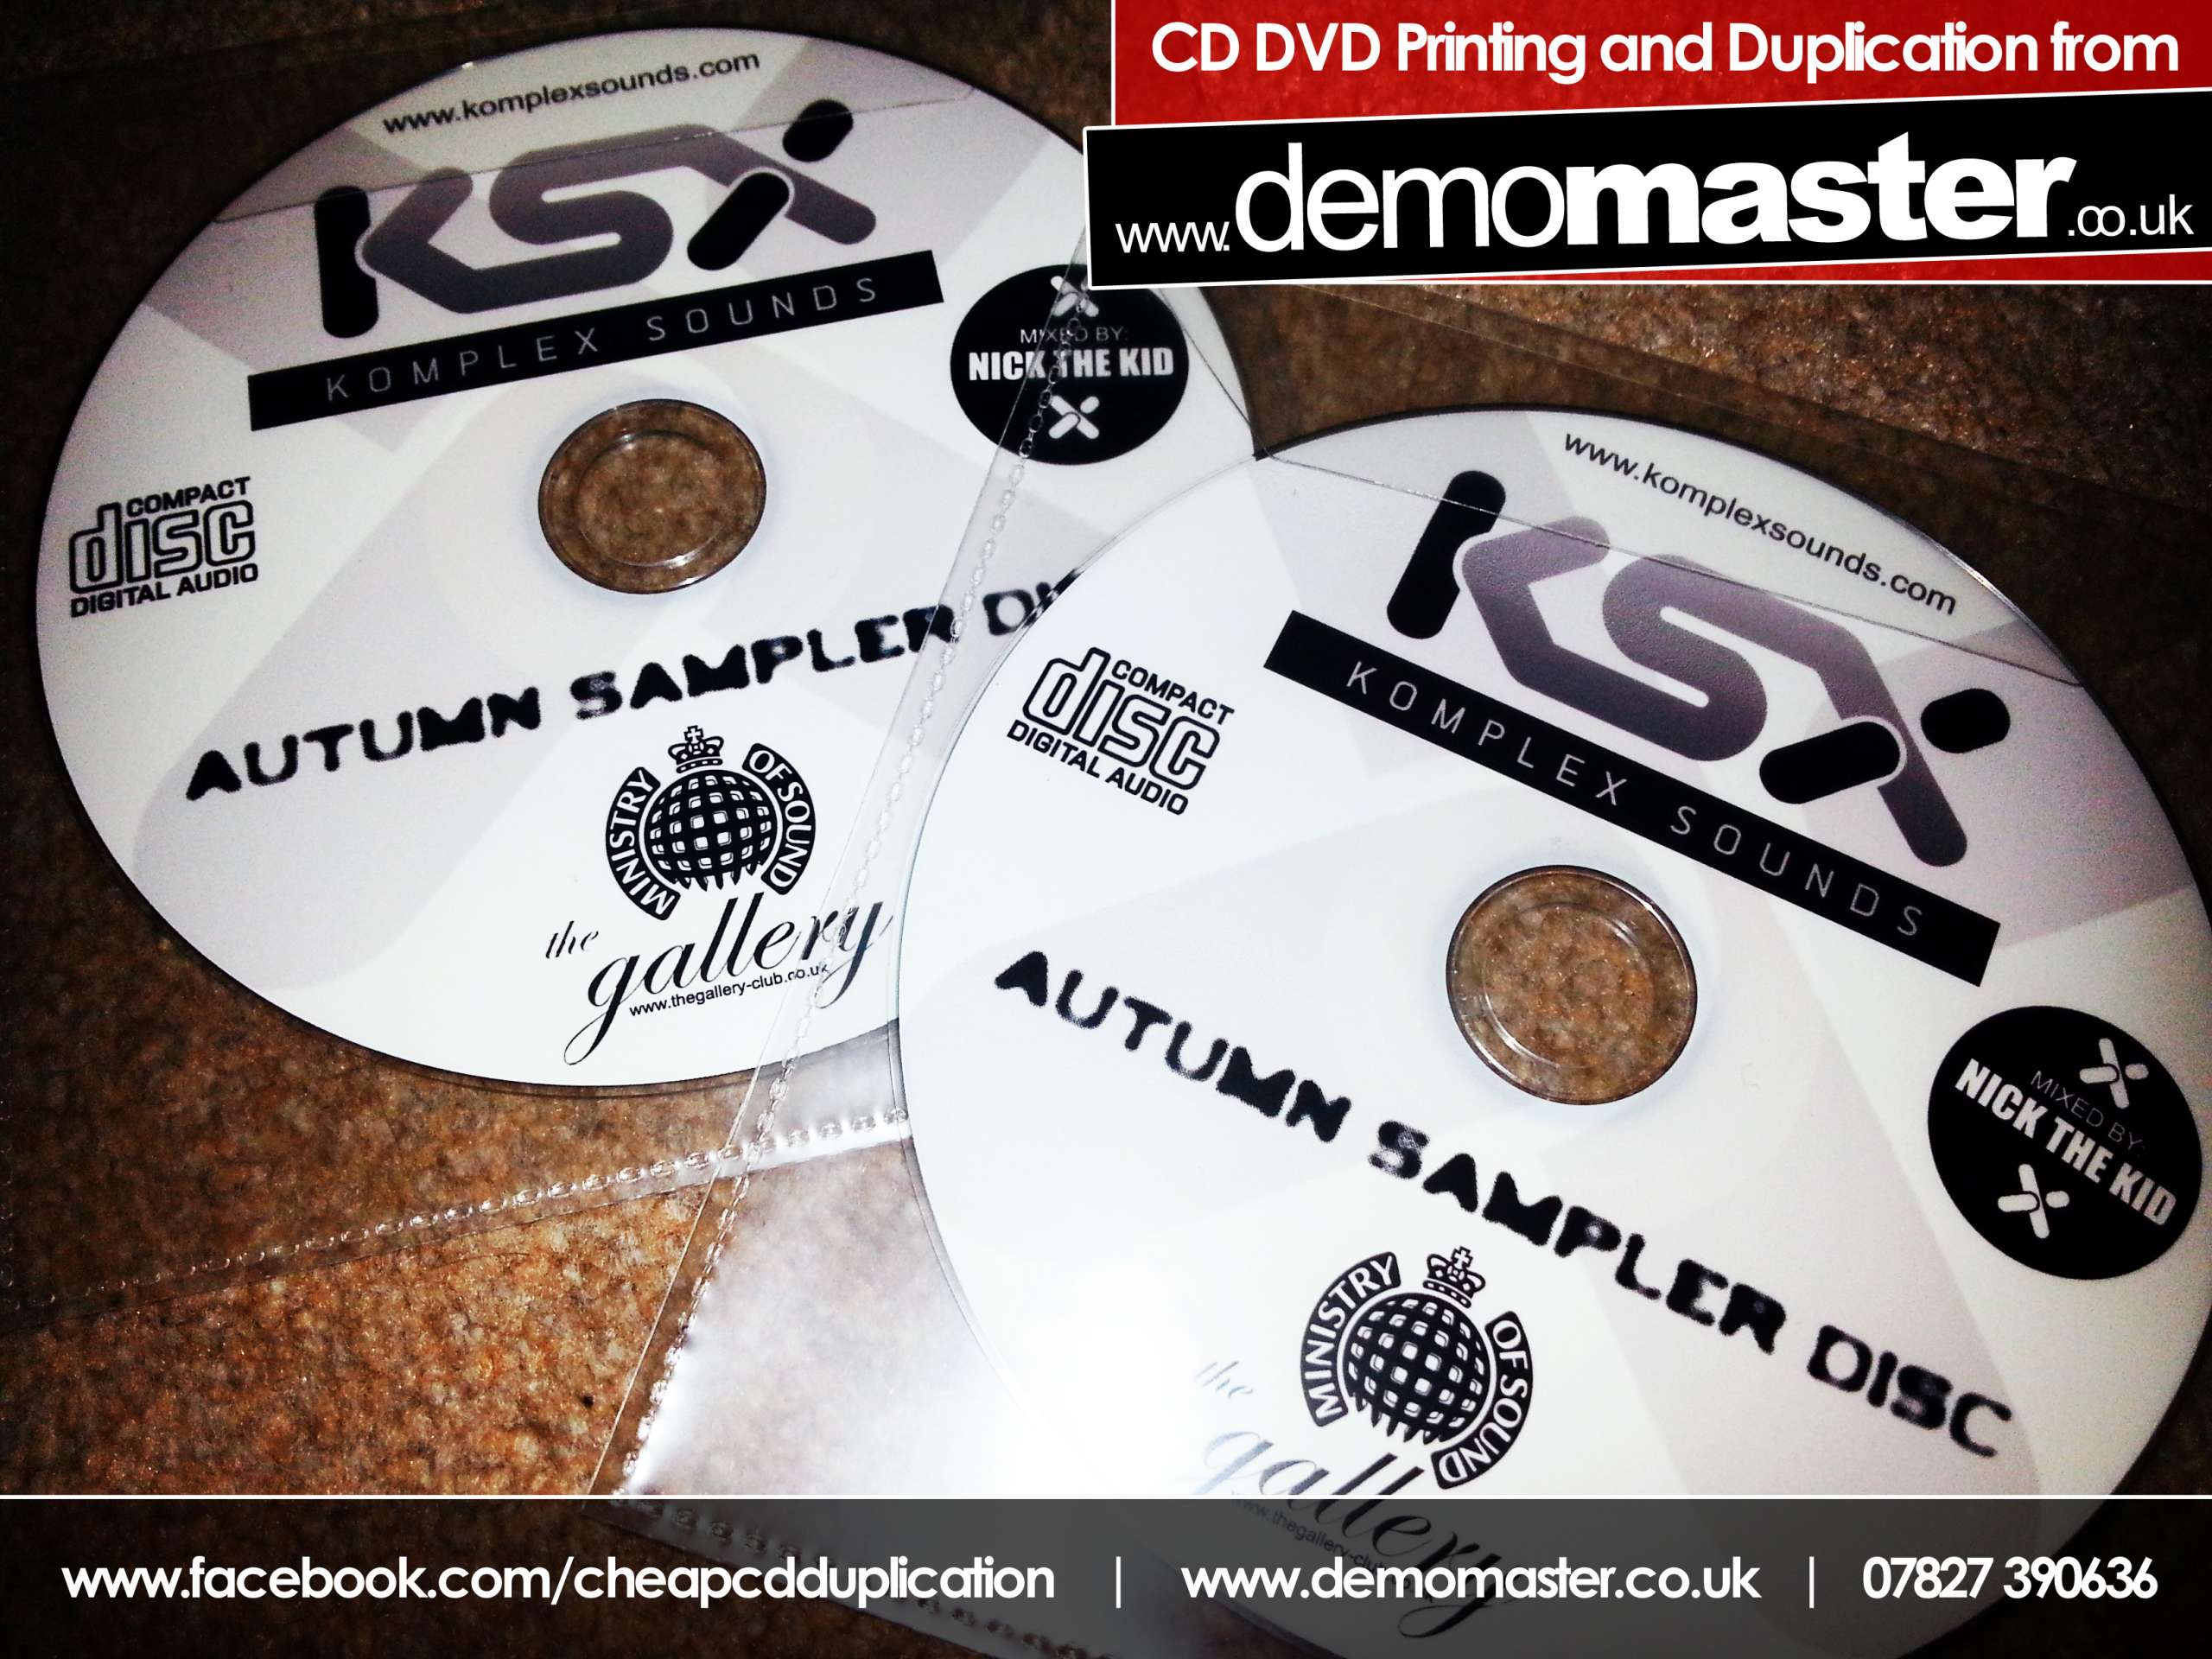 Komplex Sounds Autumn Sampler Disc mixed by Nick the Kid